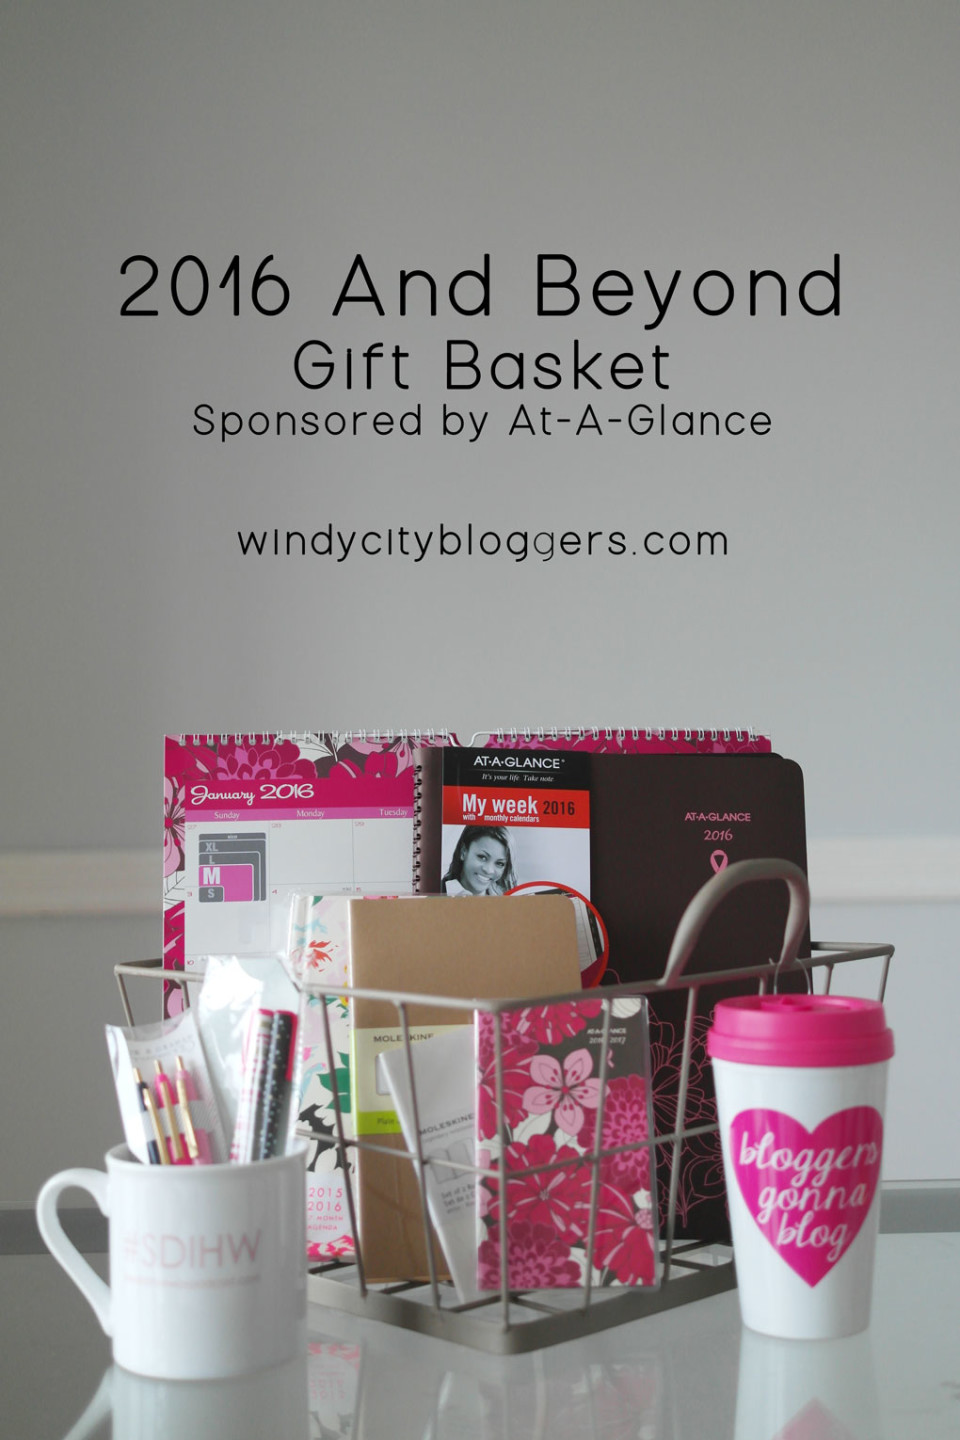 WCBC-2015-Gift-Basket-2016-And-Beyond-1-2